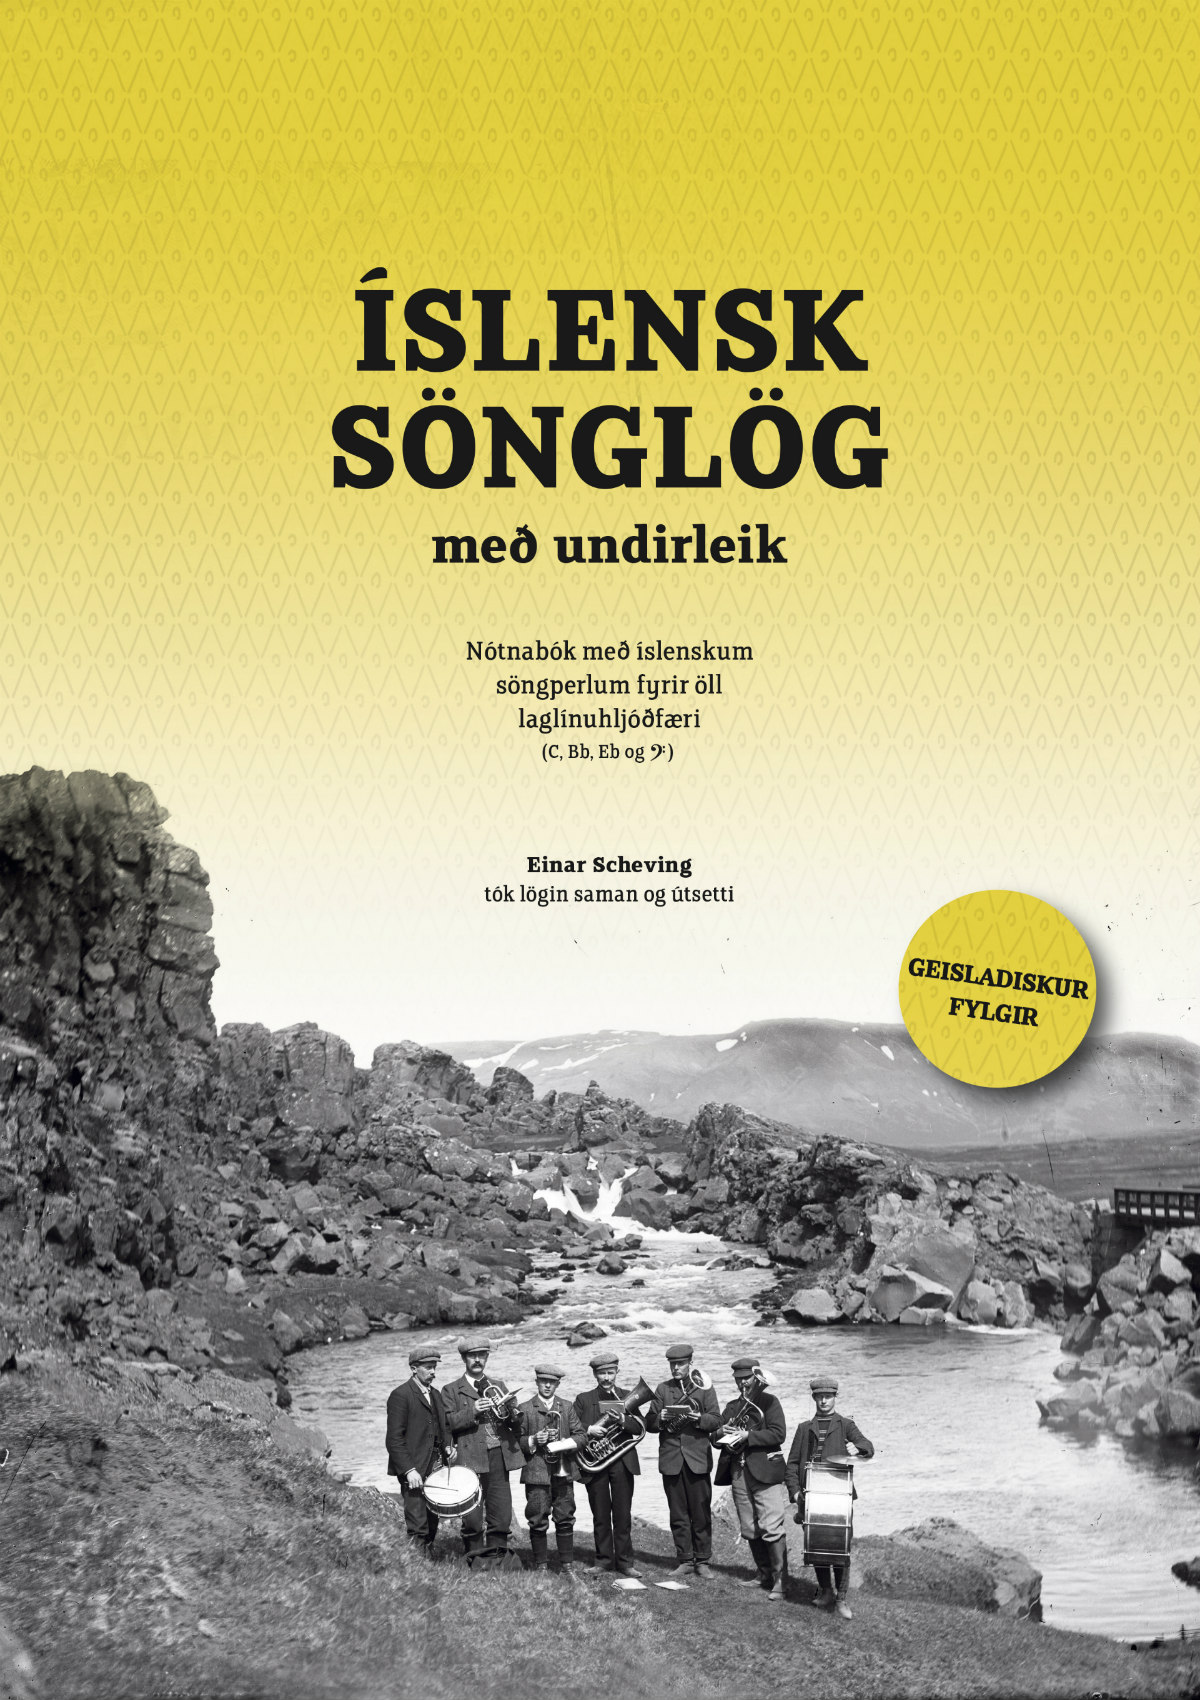 IslenskSonglog